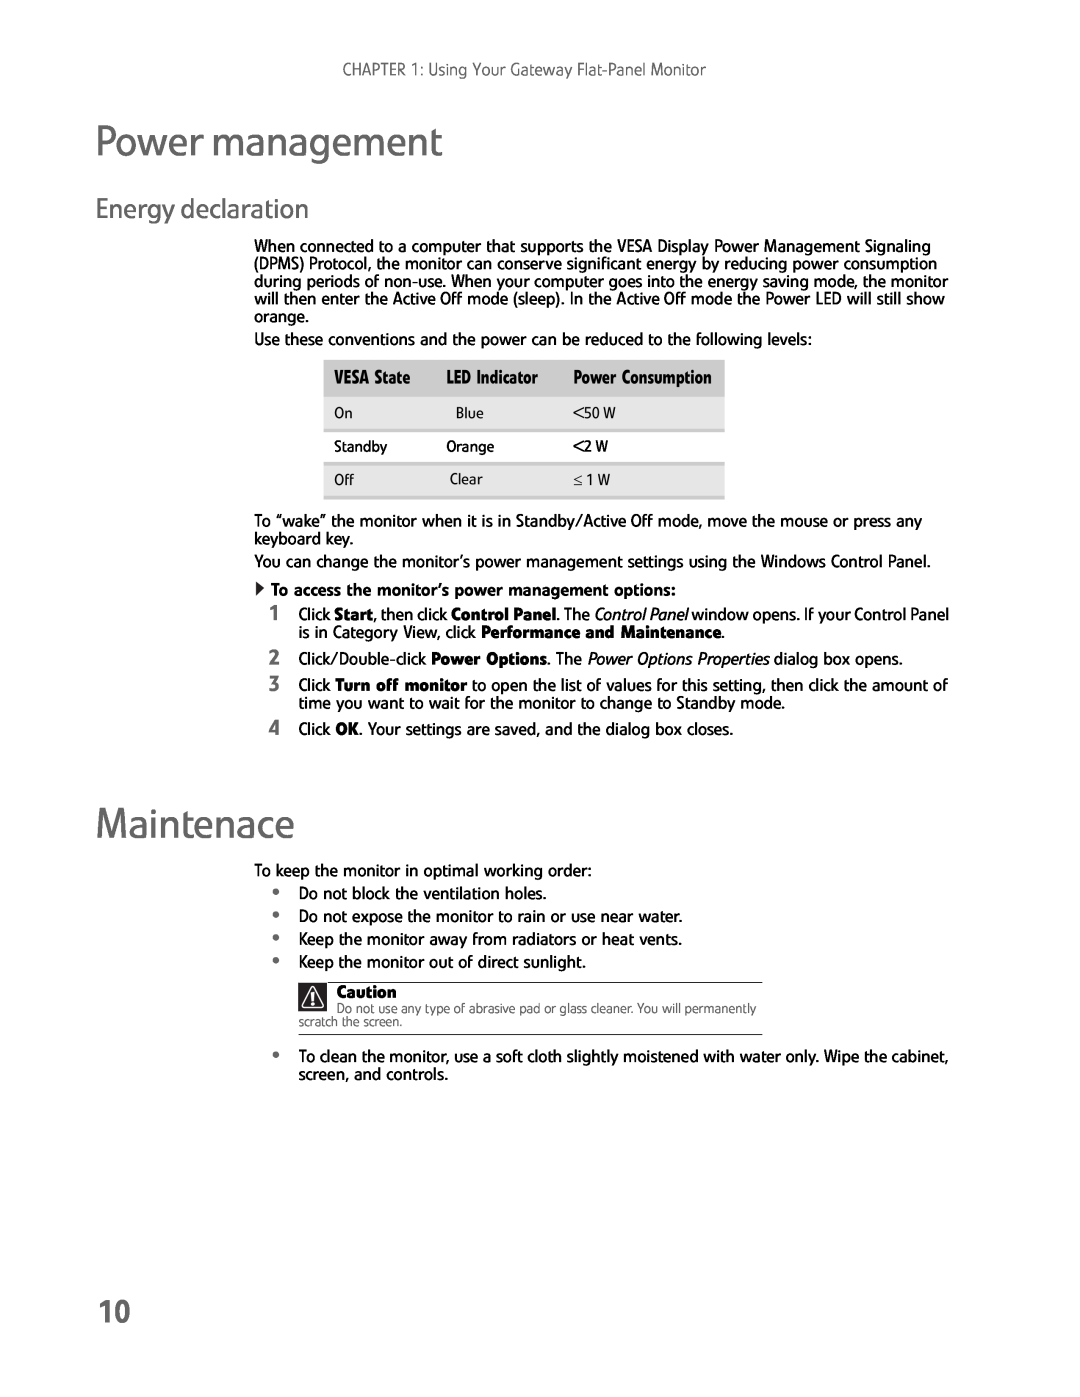 Gateway HD2202 manual Power management, Maintenace, Energy declaration, VESA State, LED Indicator 